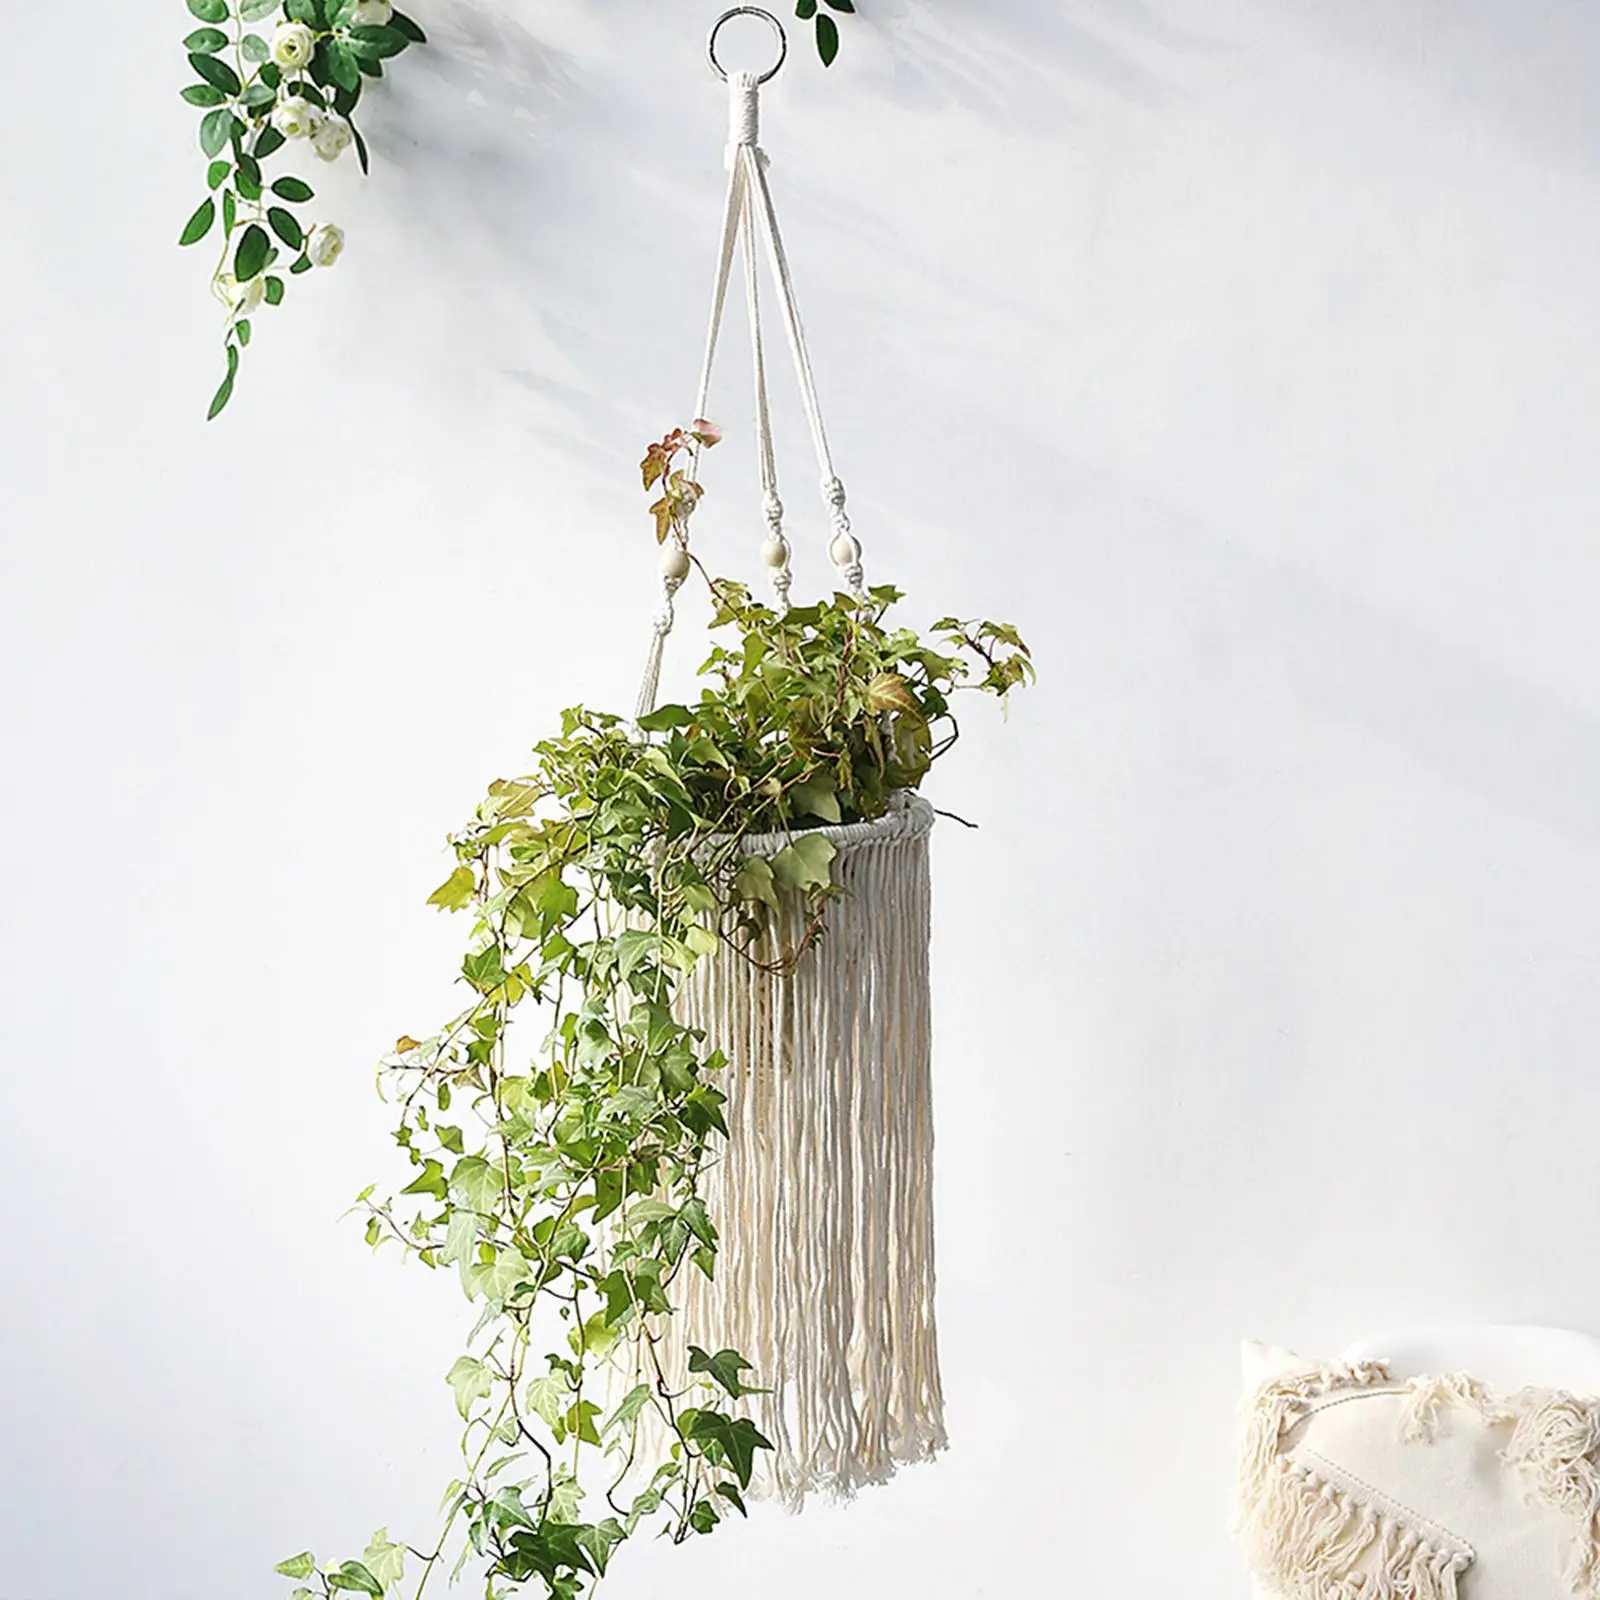 Retro Macrame Plant Hanger Braided Decorative Hanging Planter Cotton Rope Woven Basket Boho Pot Holder Art for Indoor Deck Patio